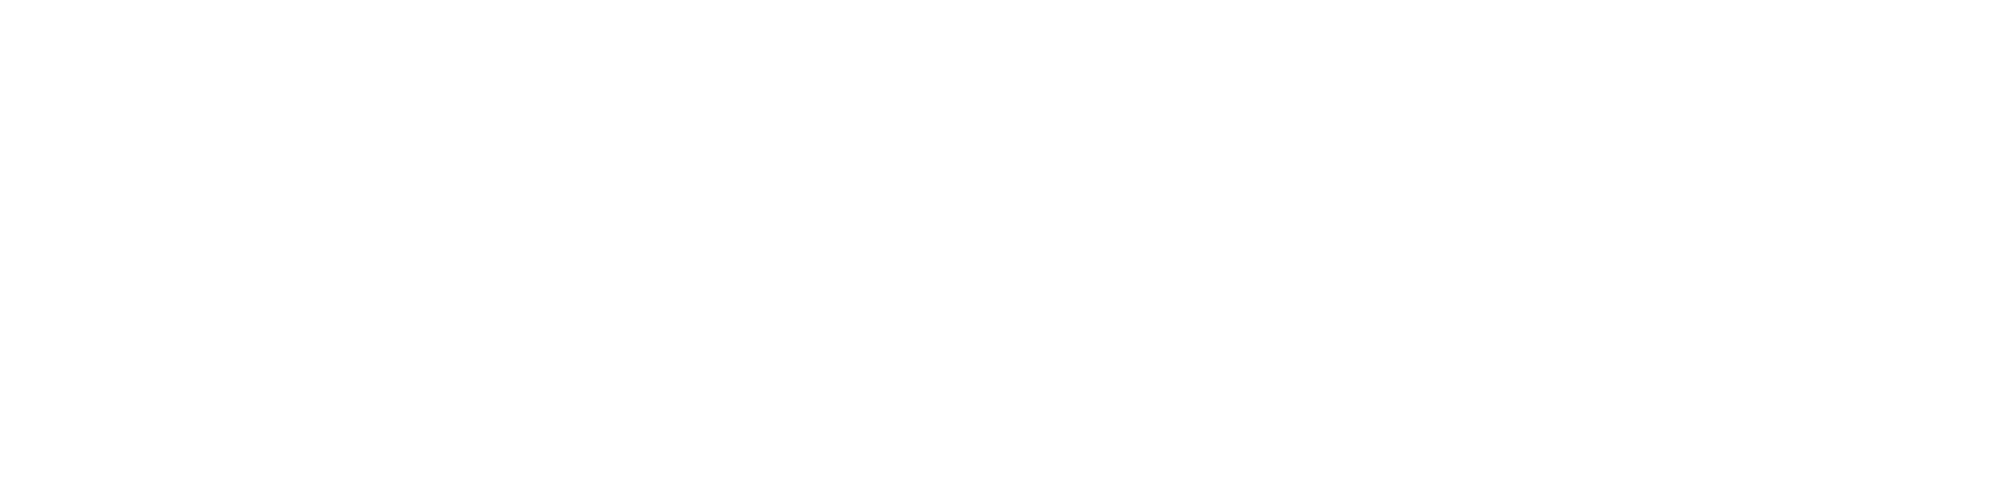 KidAware_Logo_Horizontal